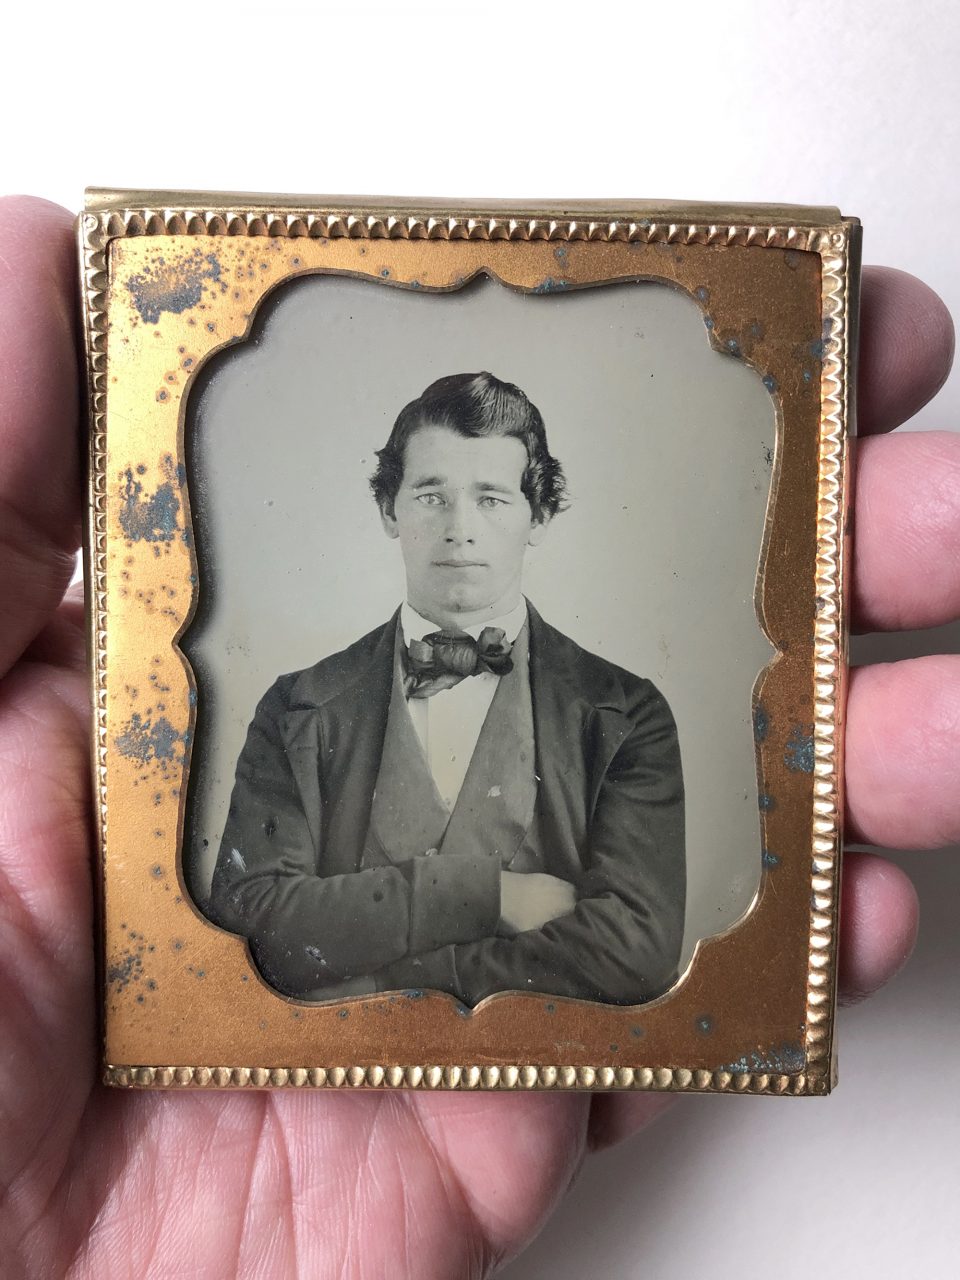 Ambrotype portrait of an unidentified man taken in the 1850s.